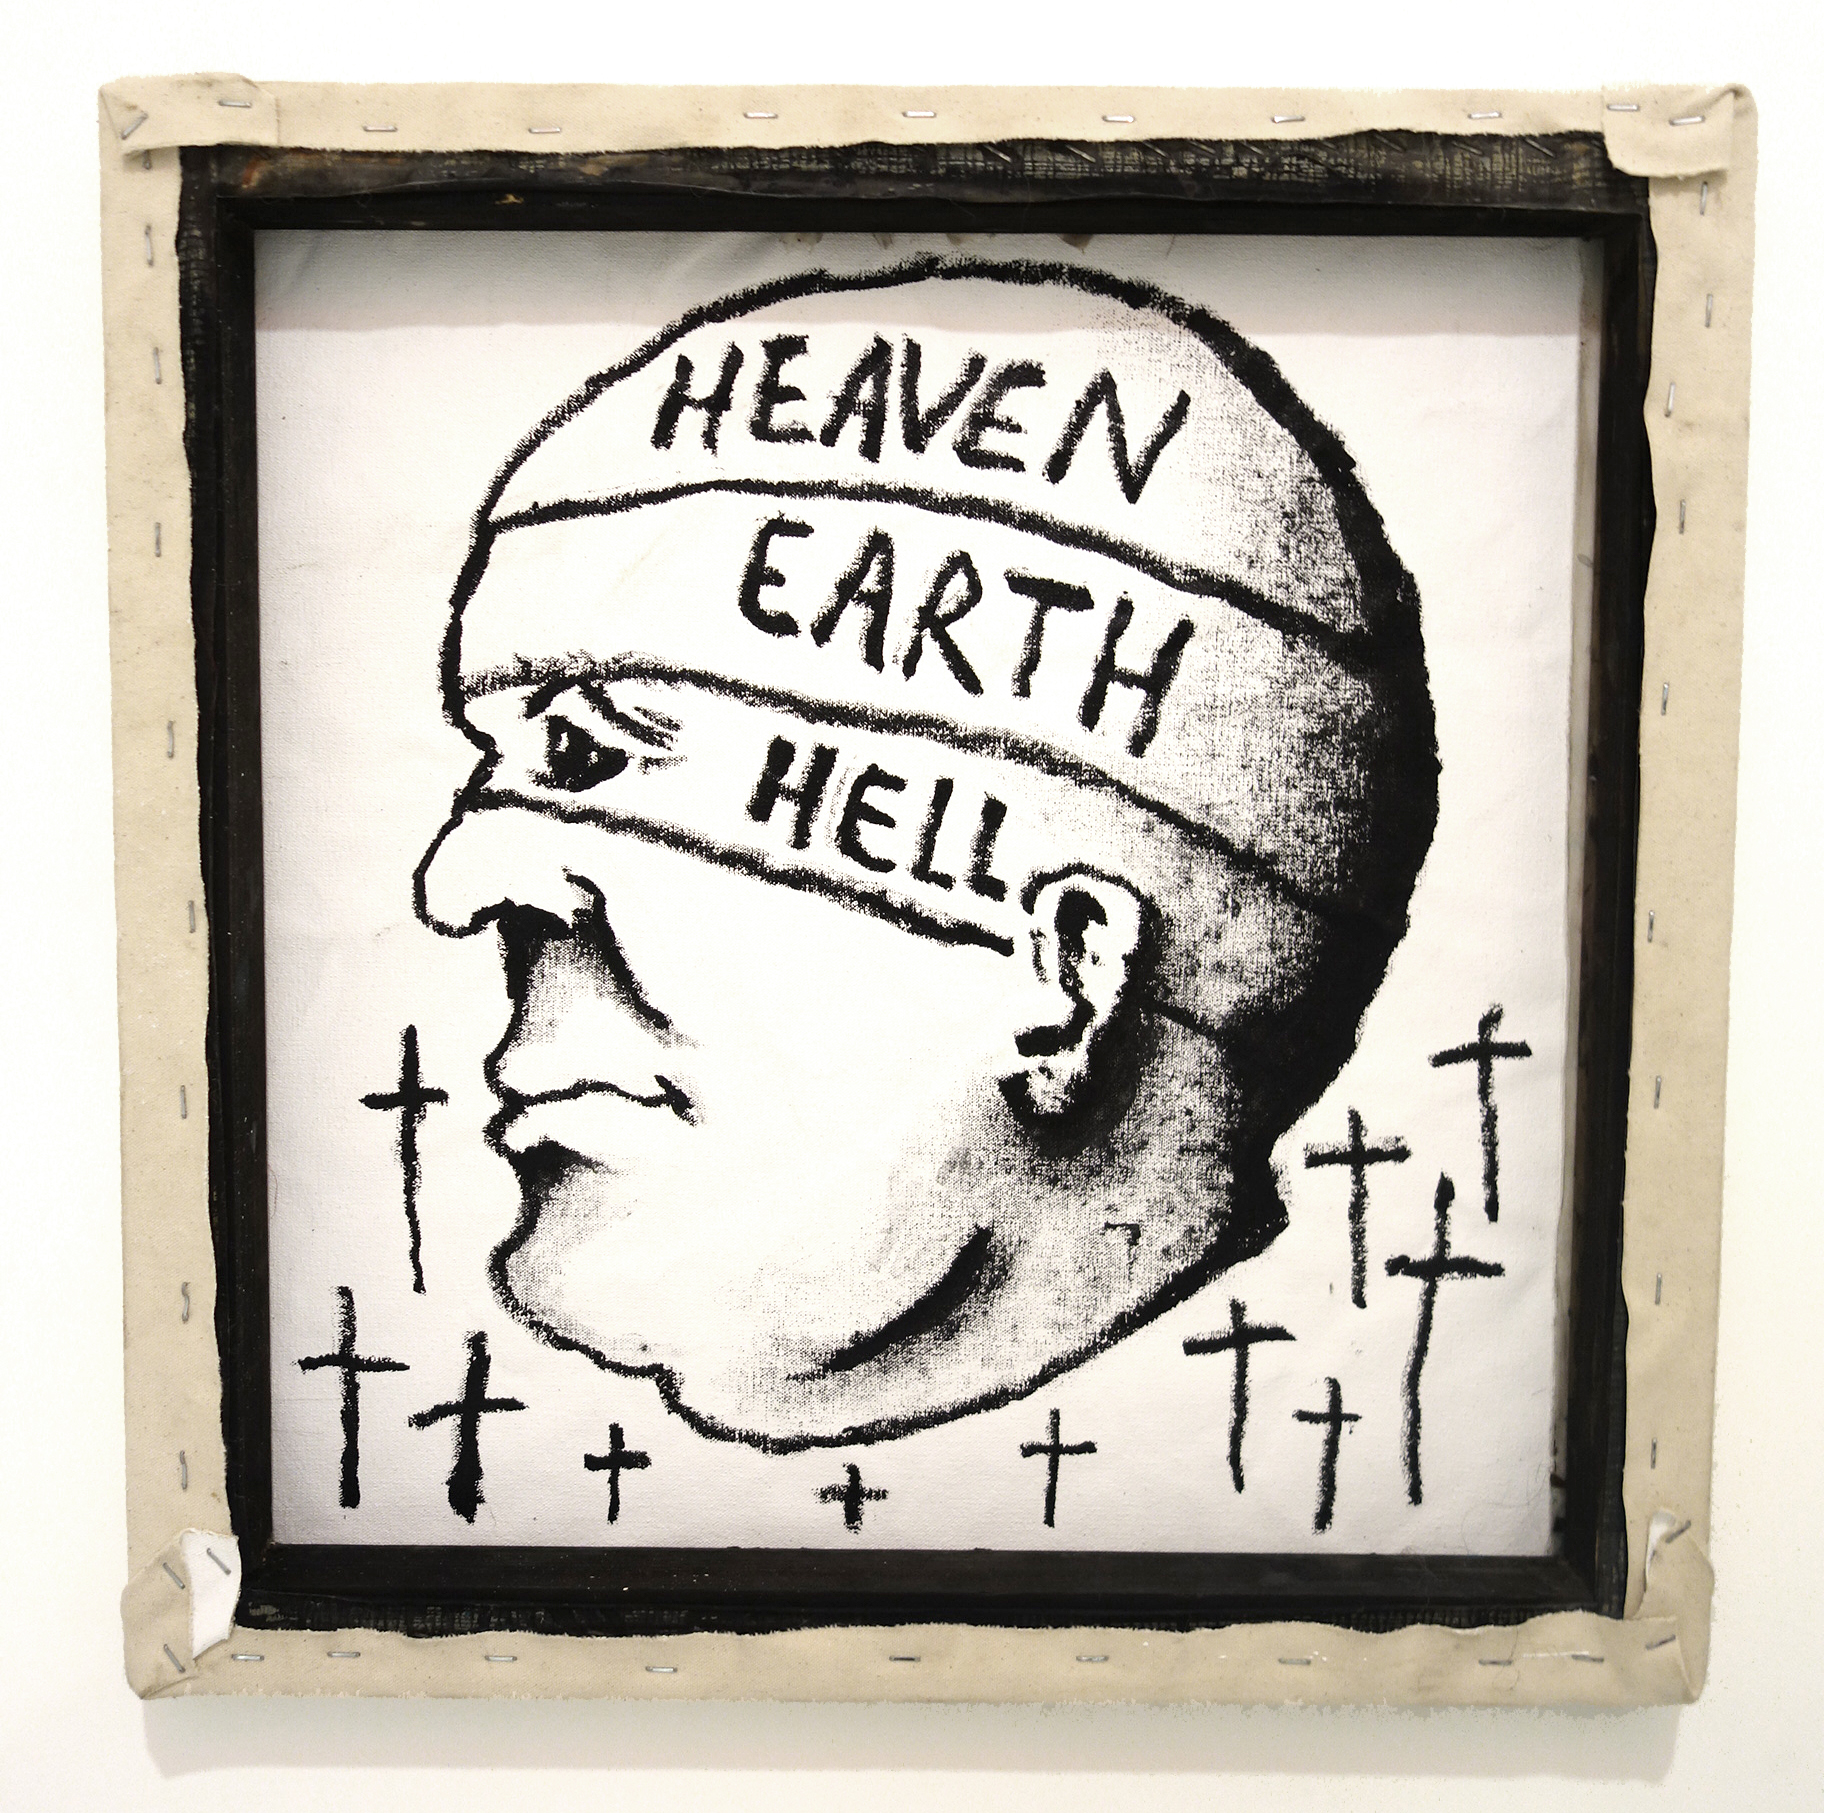 Heaven Earth Hell (full).jpg